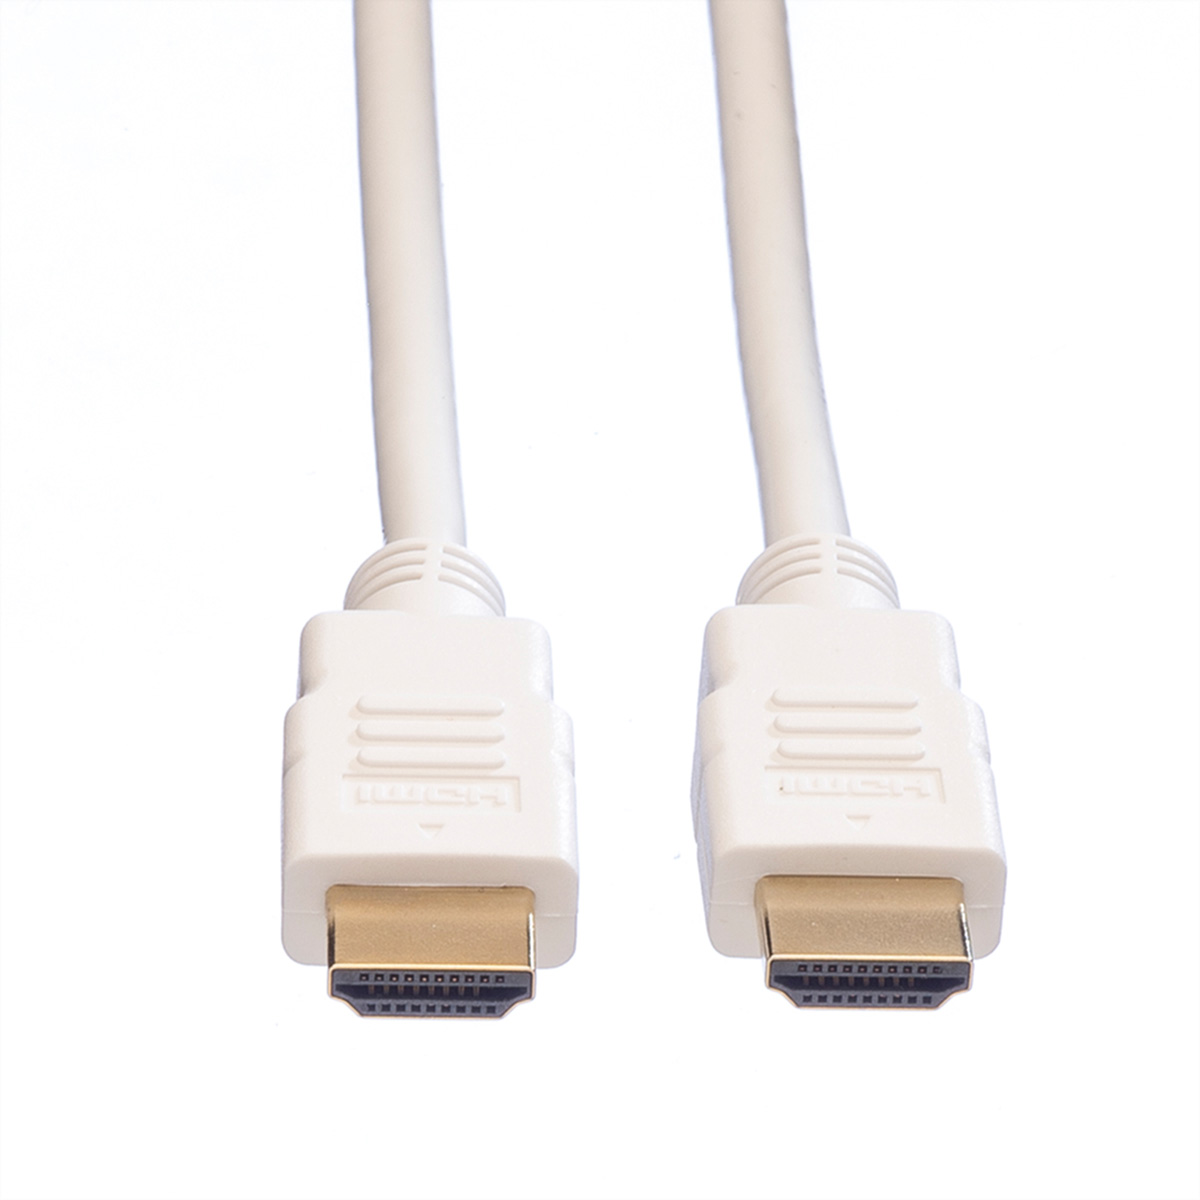 Speed Kabel mit High mit HDMI ROLINE HDMI Speed Kabel High Ethernet Ethernet